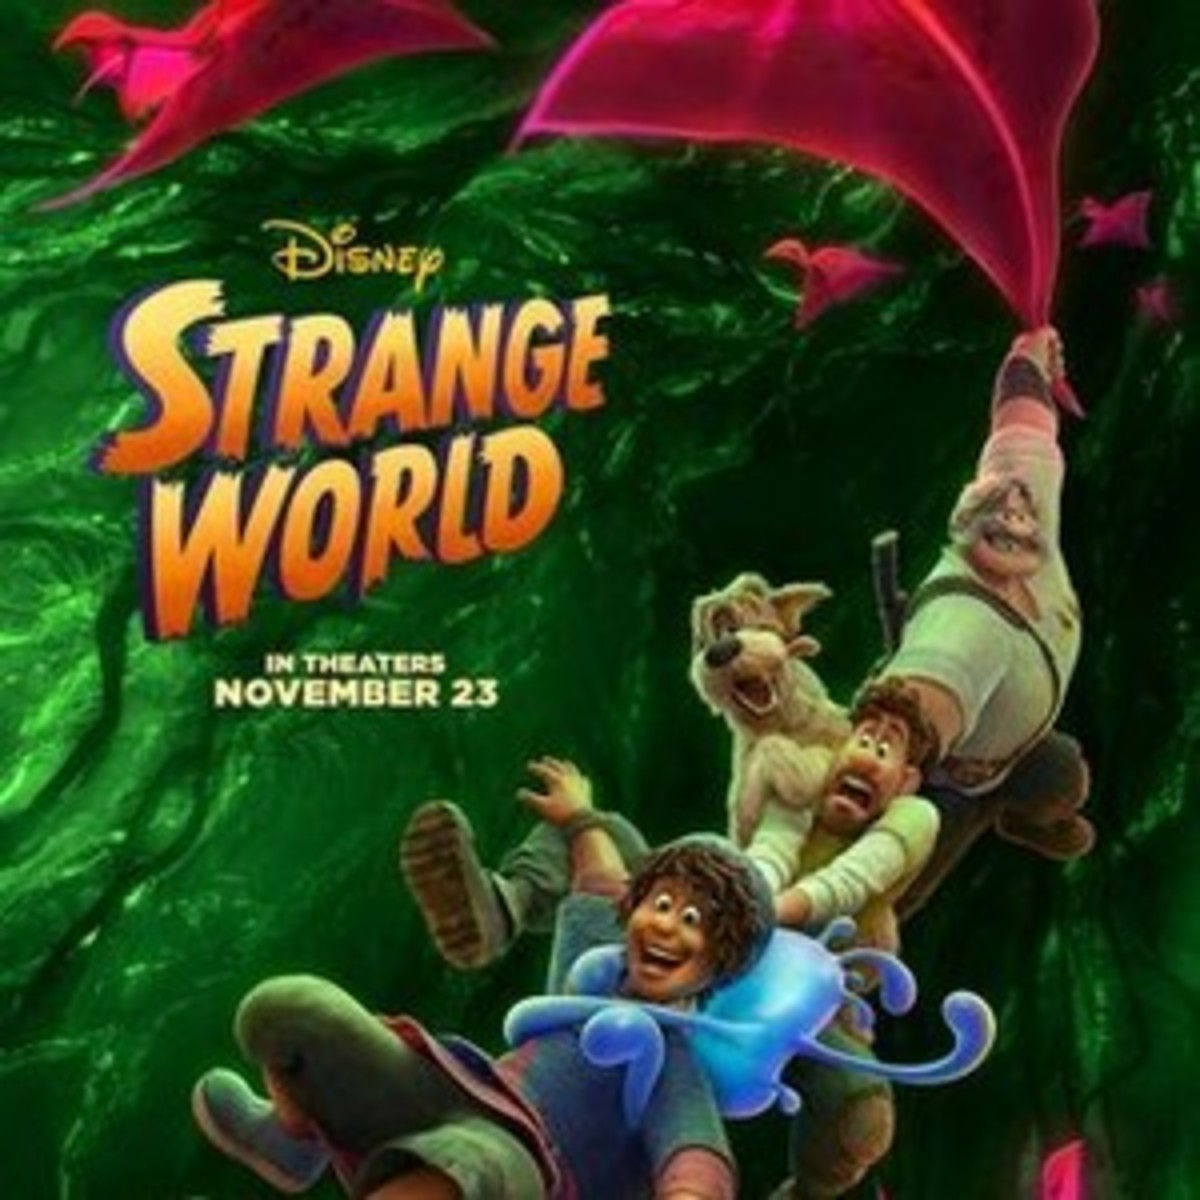 the strange world movie review